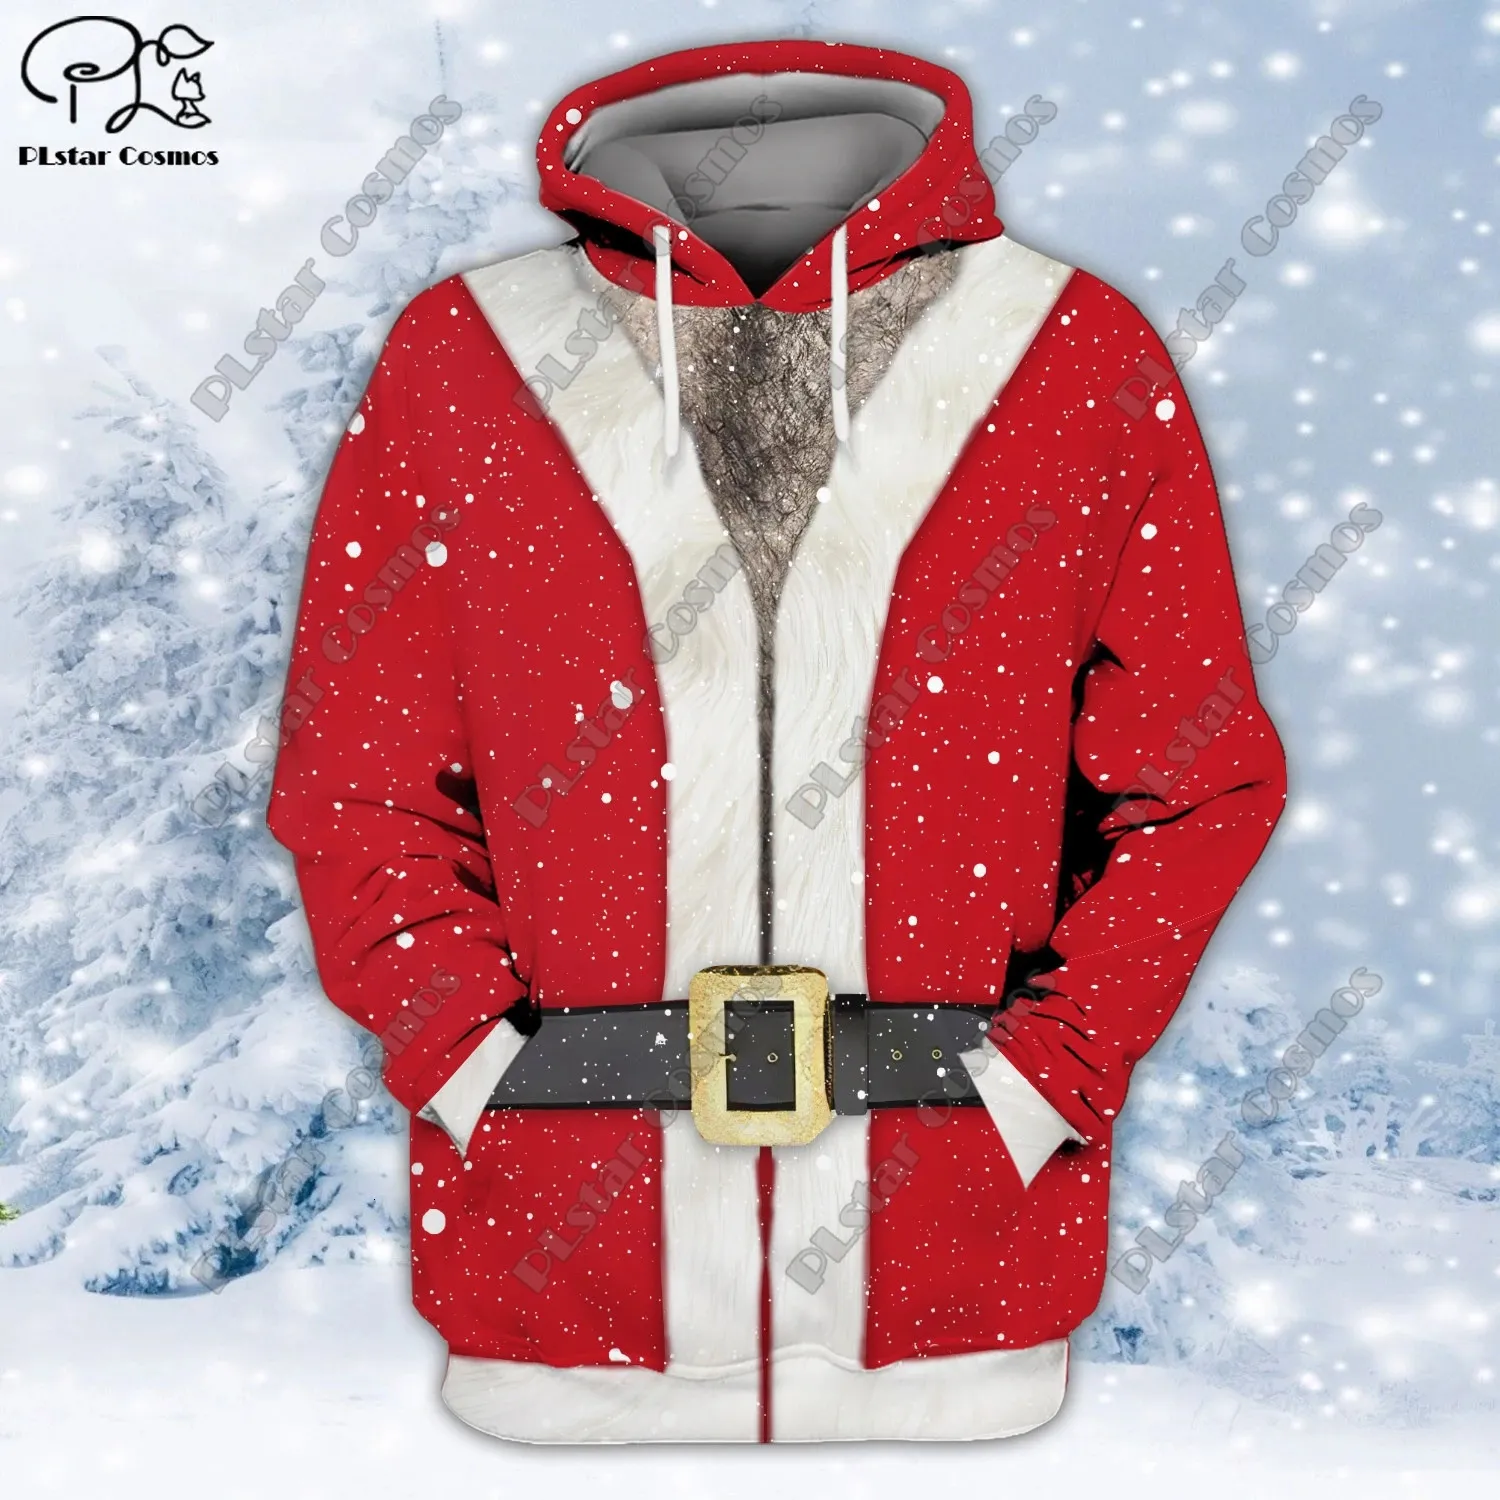 Men's Hoodies Sweatshirts PLstar Cosmos 3D Printed Christmas Collection Graphic Print Unisex Clothing Fun Casual Hoodie/Sweatshirt/Zip/Jacket/T-Shirt S-3 231205